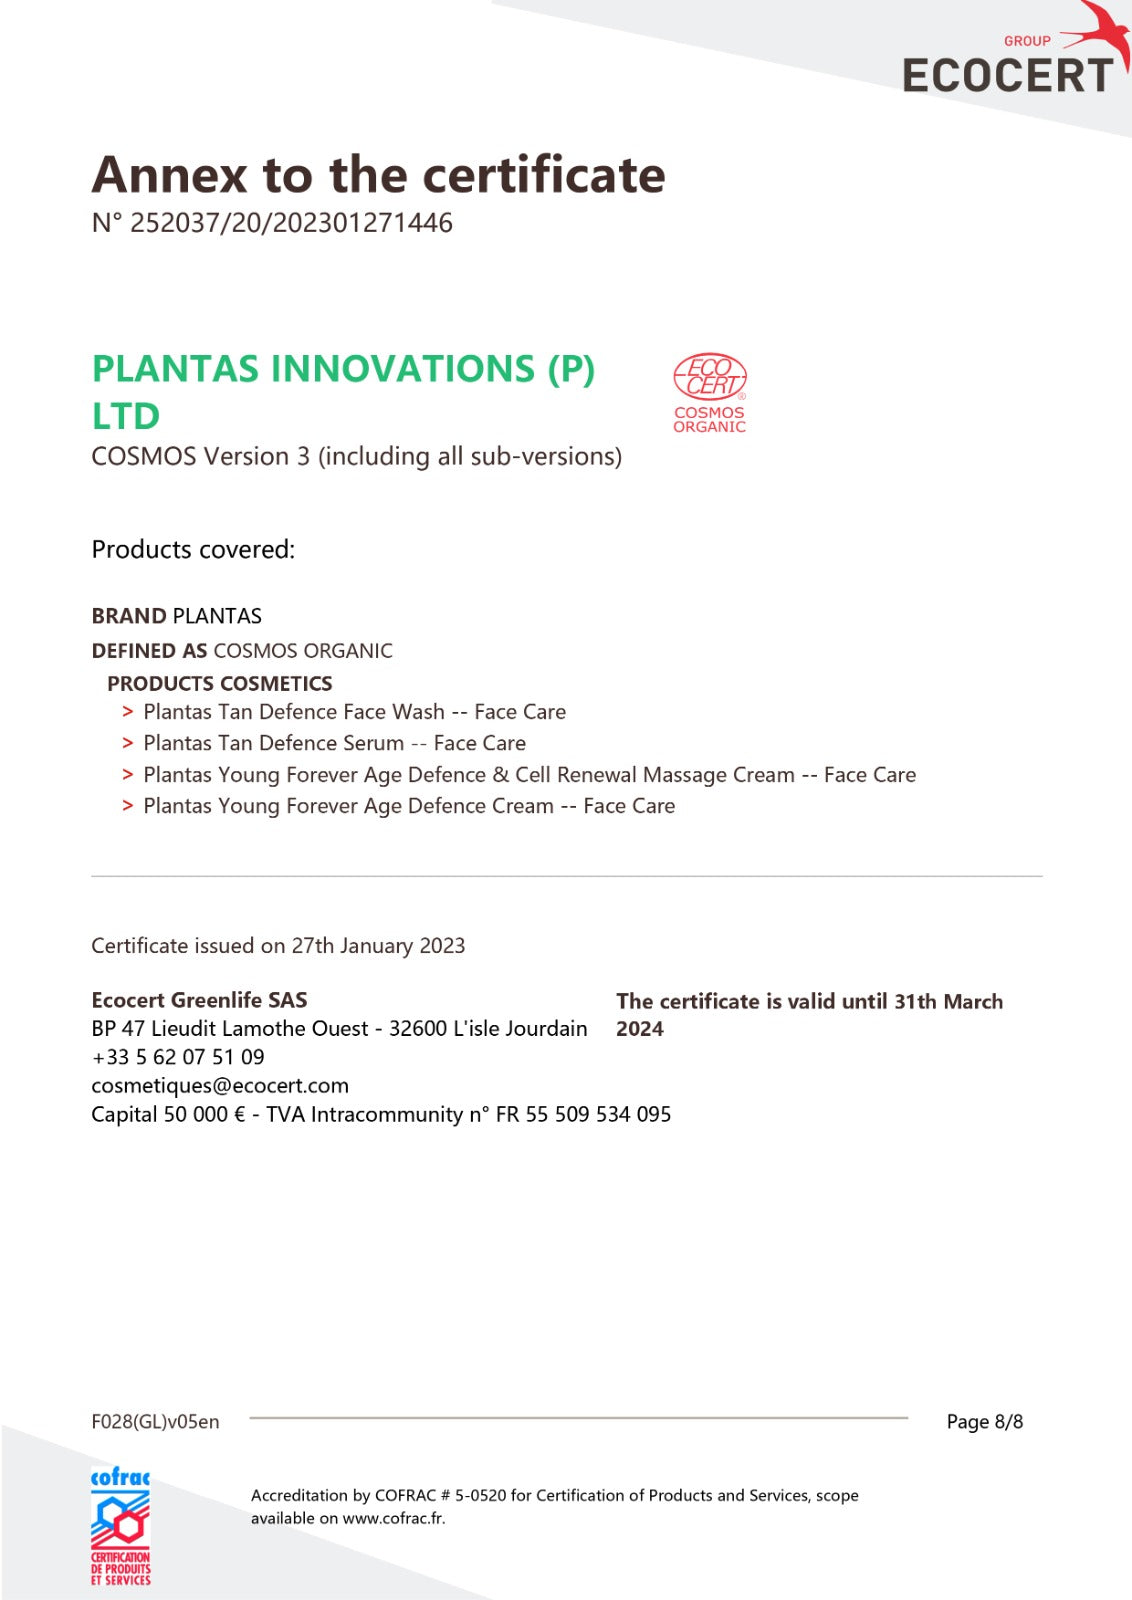 Plantas - Certificate